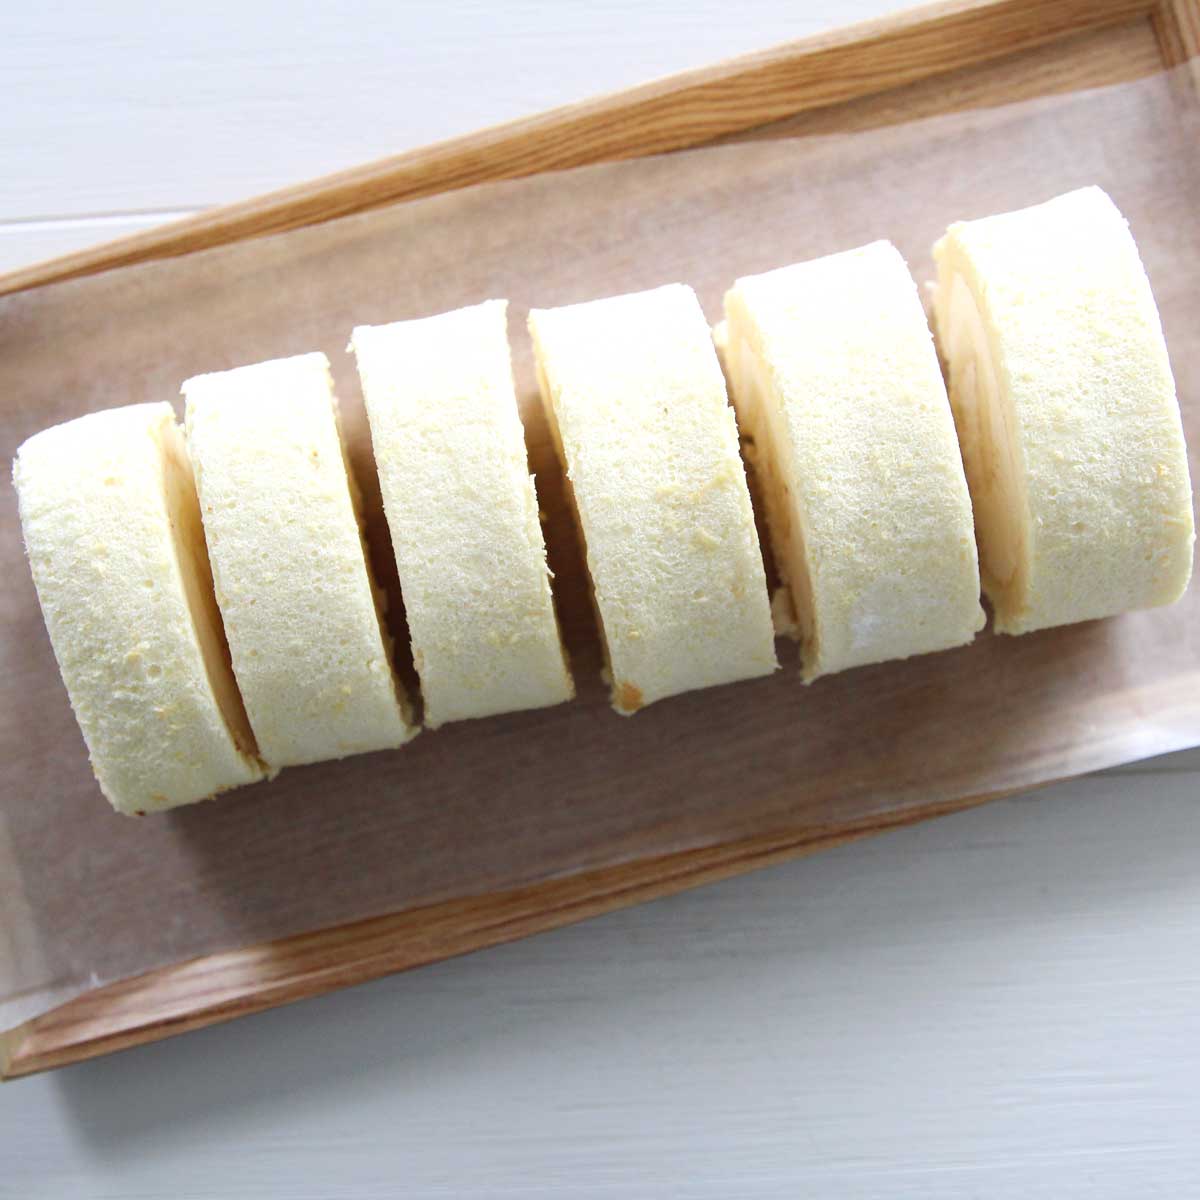 Unbelievably Soft Flourless Vanilla Swiss Roll Cake (Gluten-Free) - Cinnamon Applesauce Scones